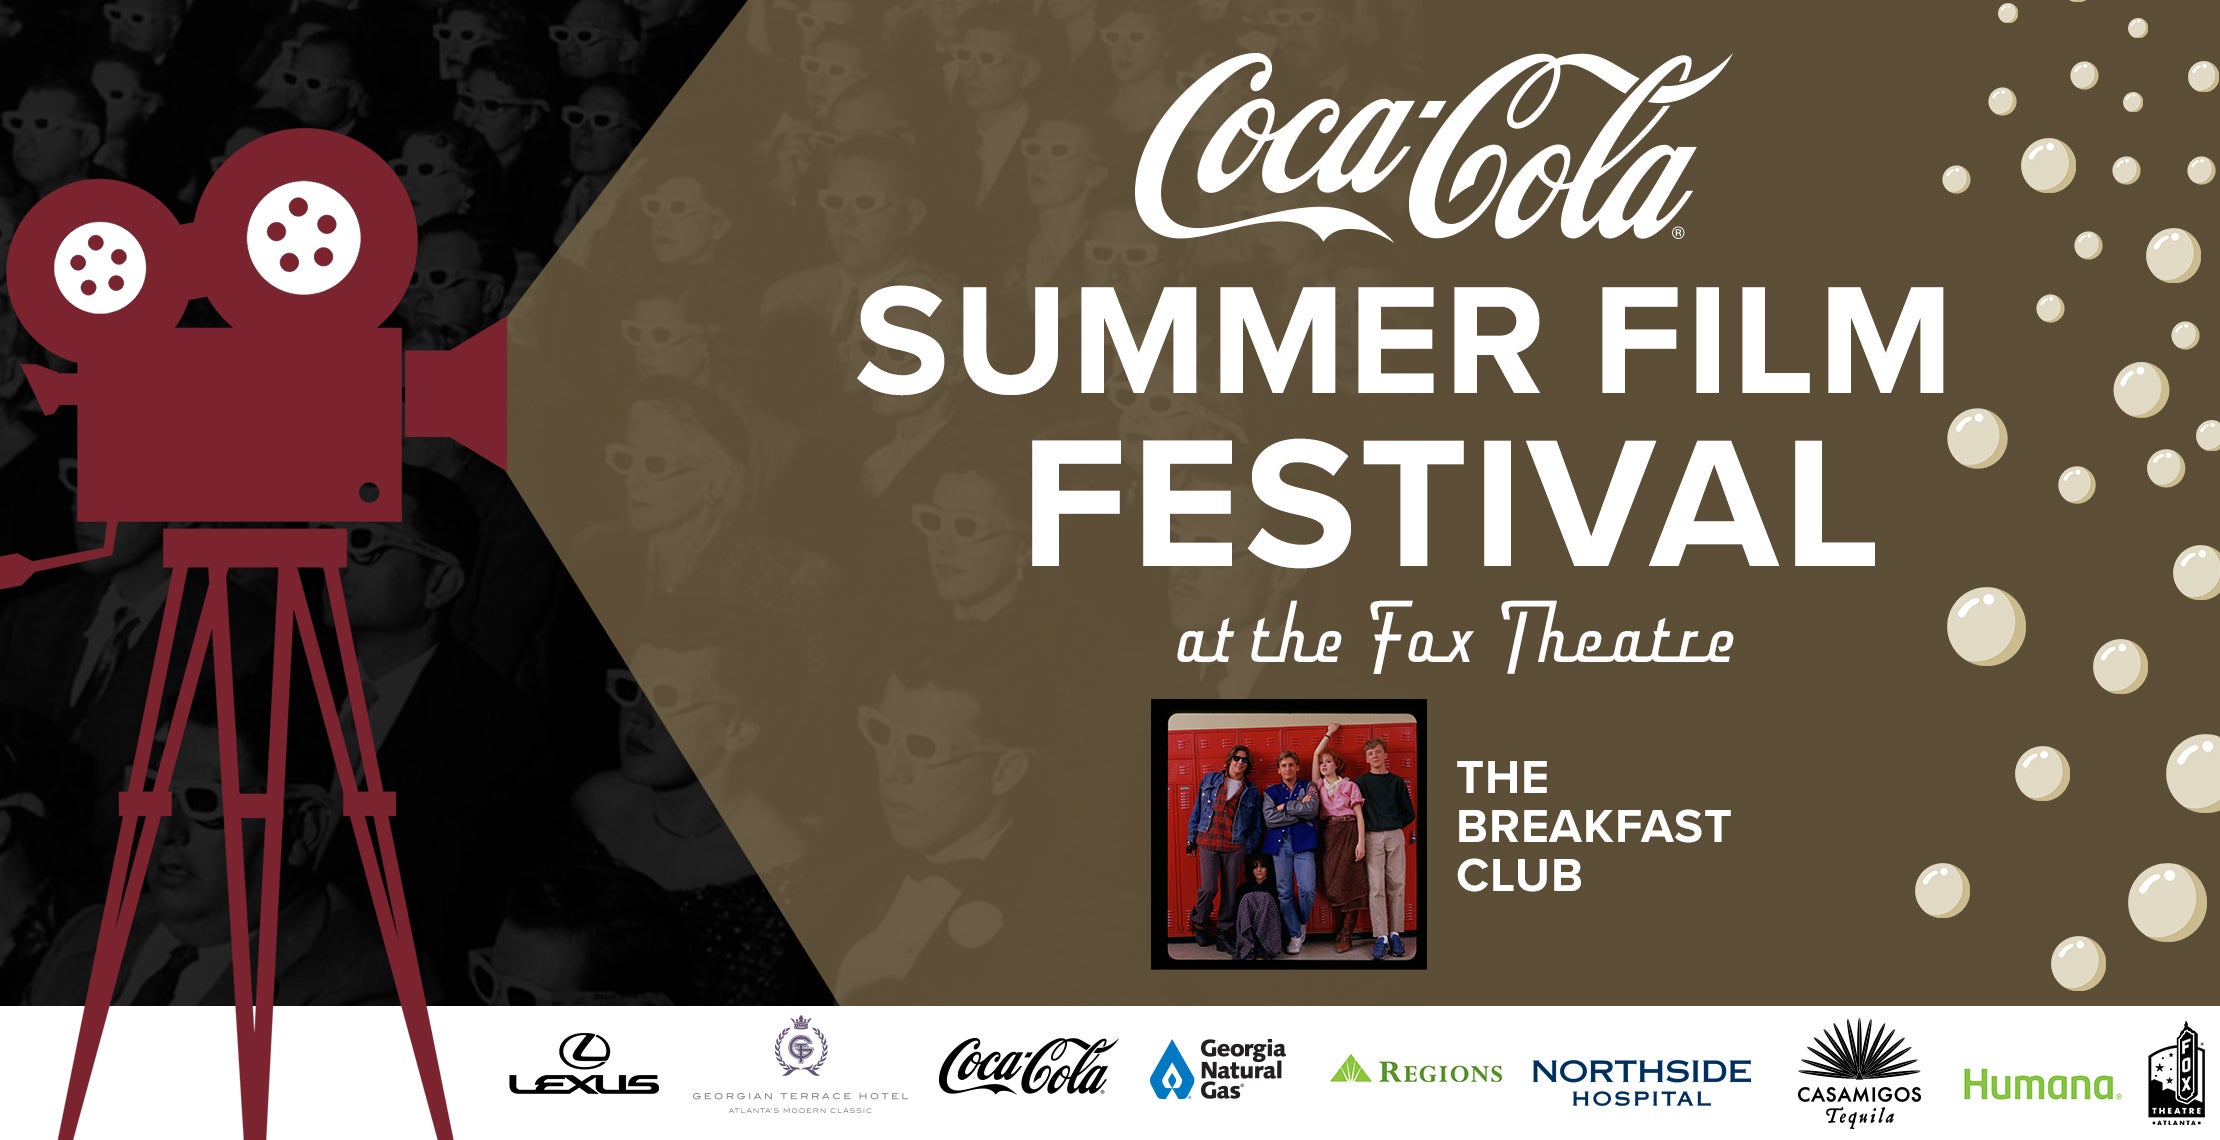 Coca-Cola Summer Film Festival: The Breakfast Club